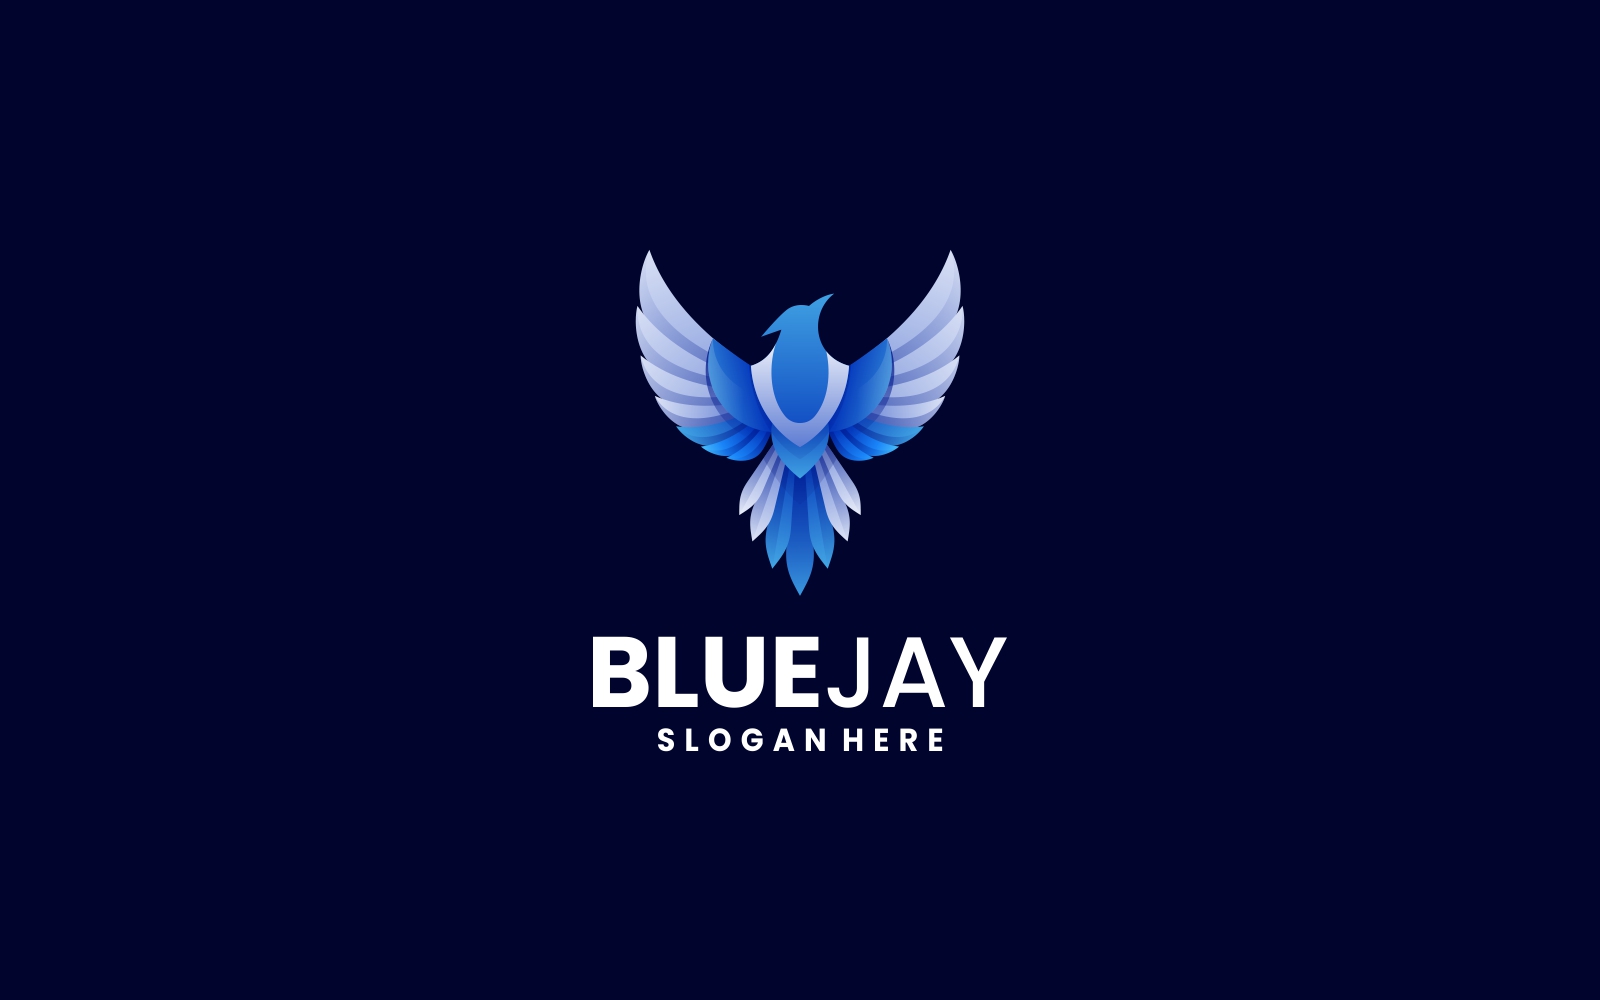 Logo bird blue jay silhouette style Royalty Free Vector